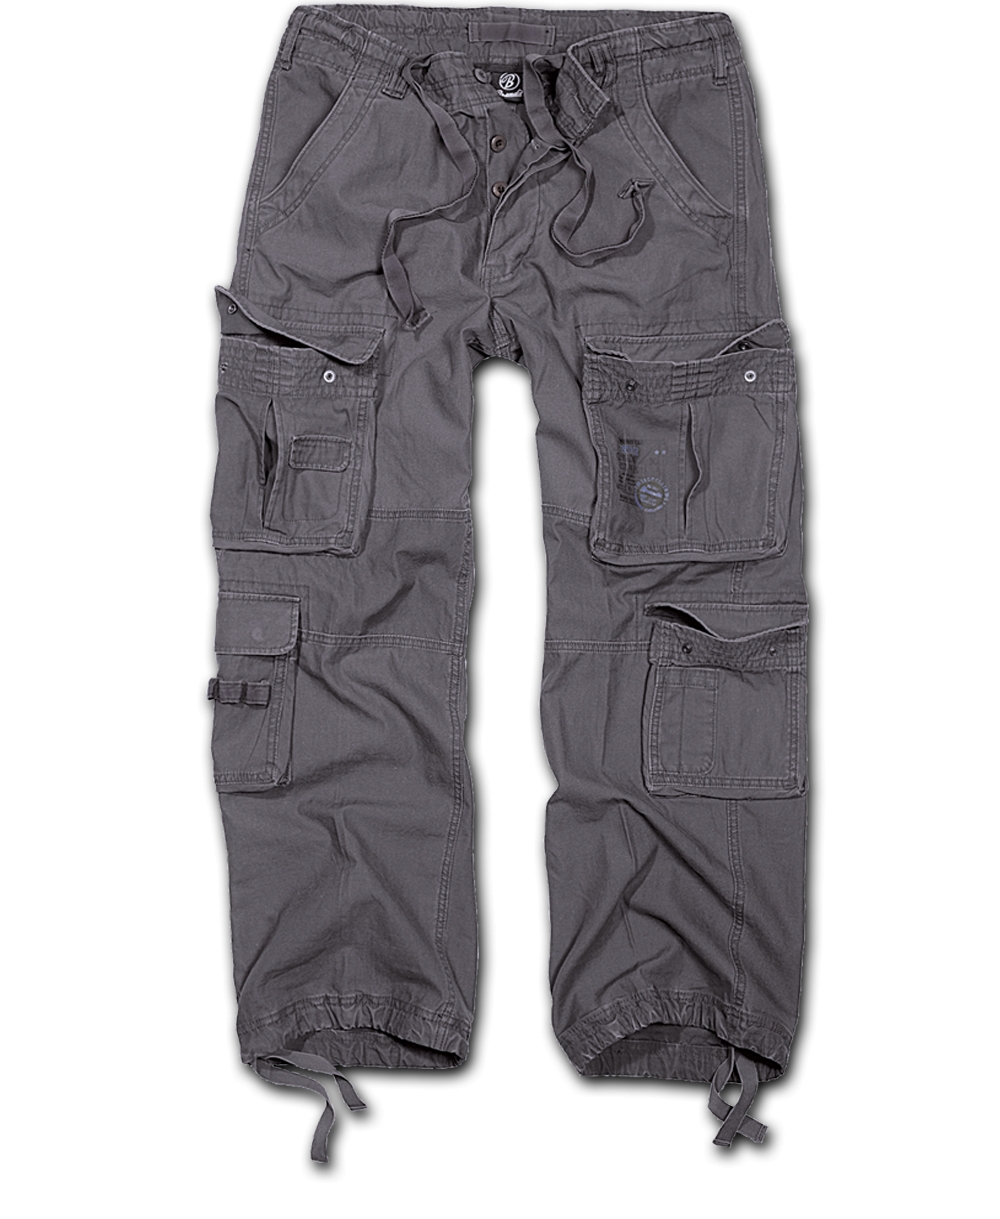 Kalhoty Brandit Pure Vintage - antracitové, XXL